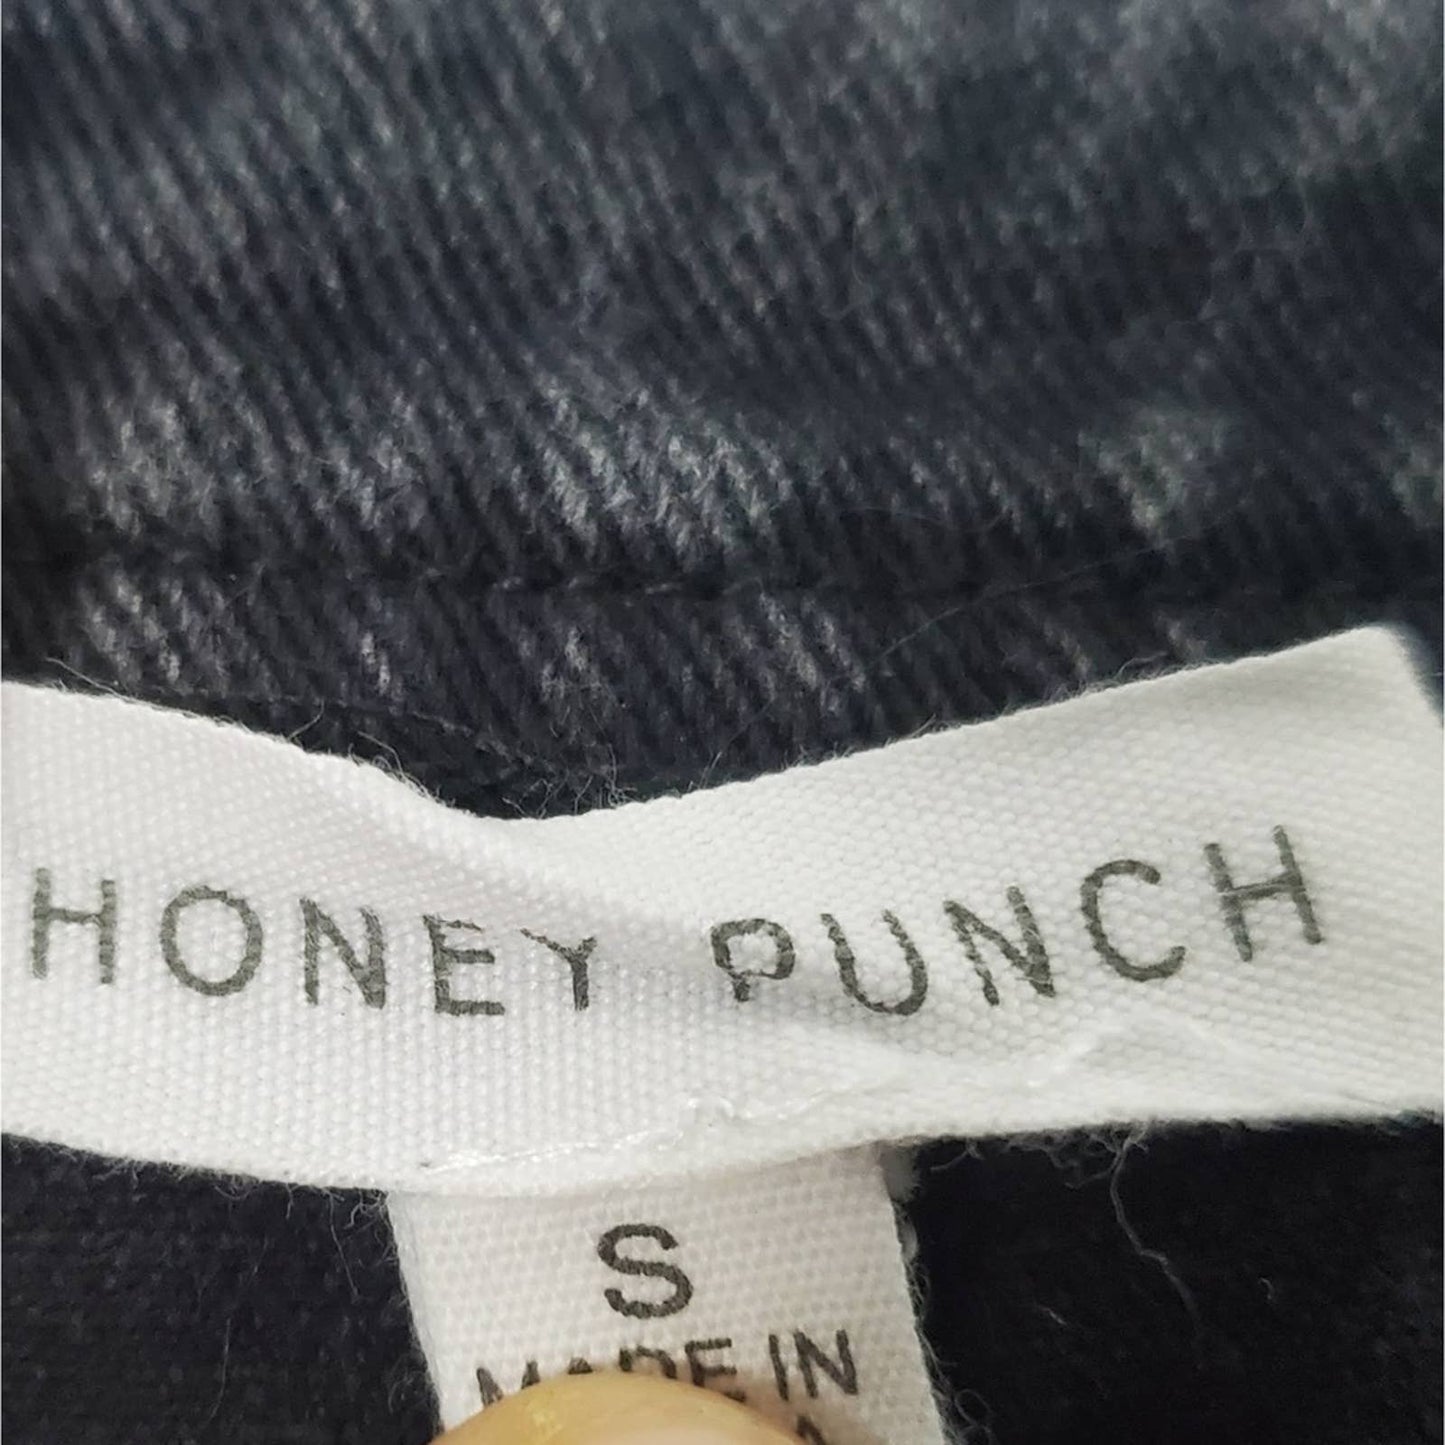 Honey Punch Button Front Black Denim Jean Skirt - S